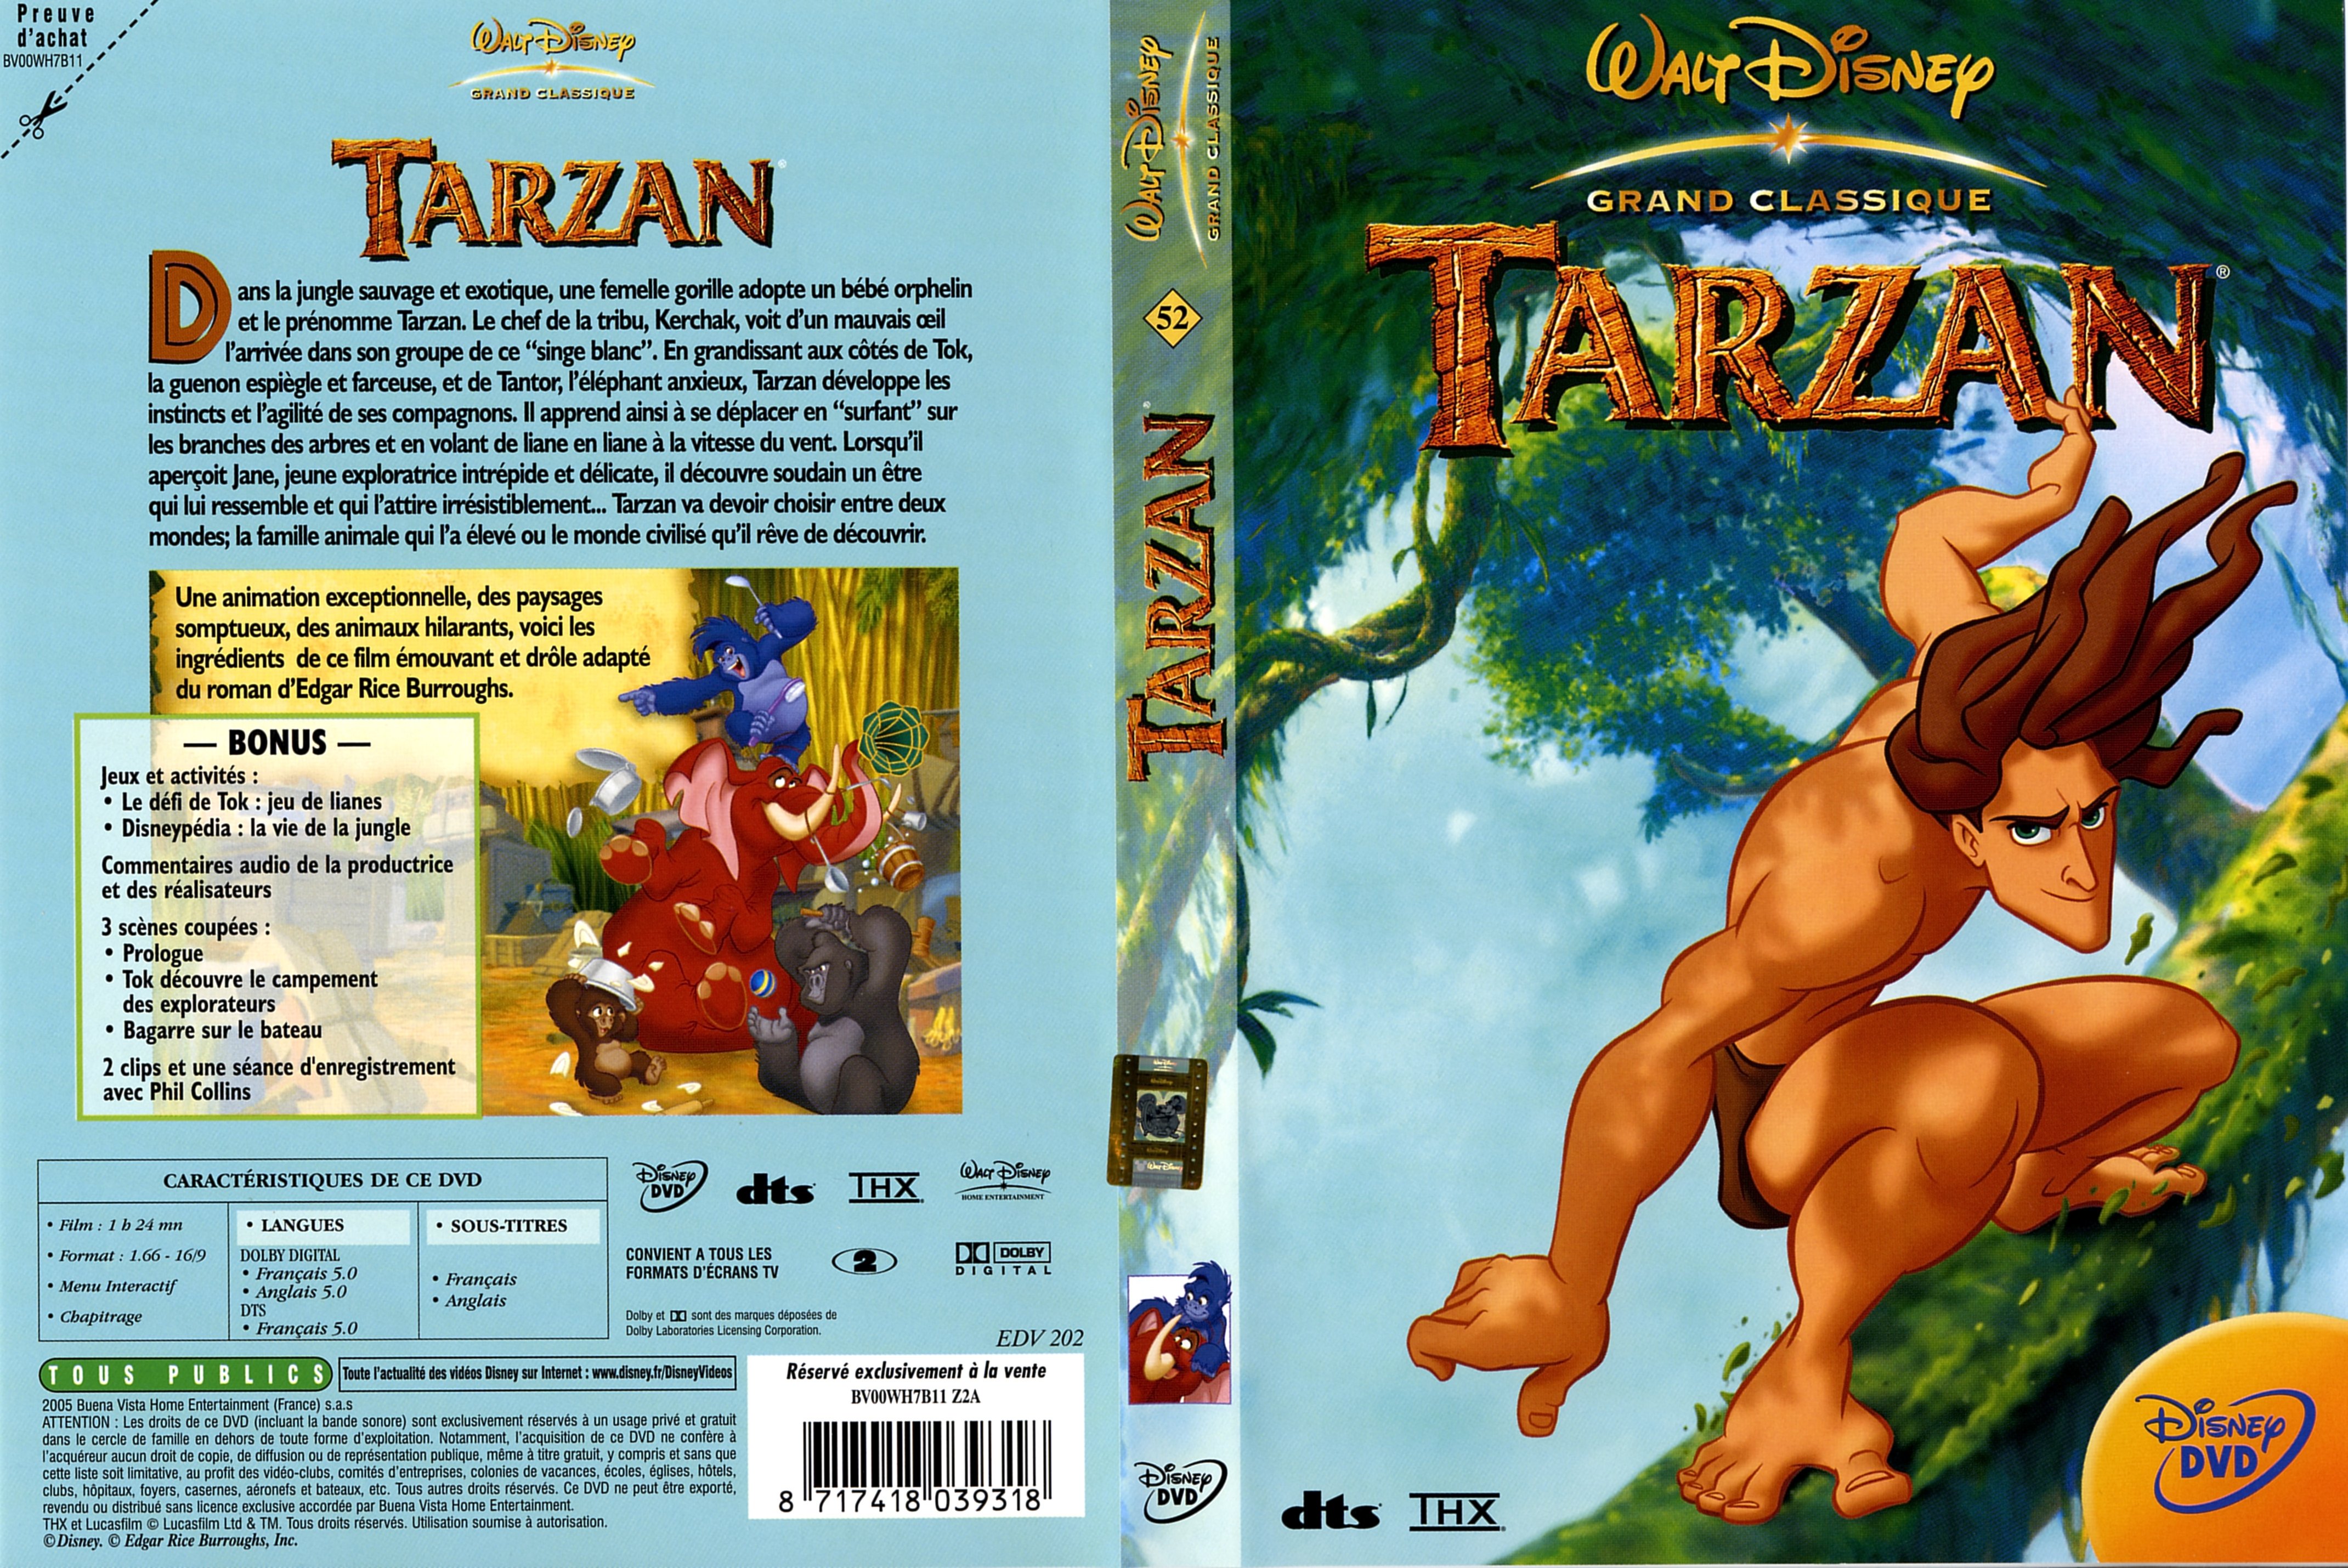 Jaquette DVD Tarzan